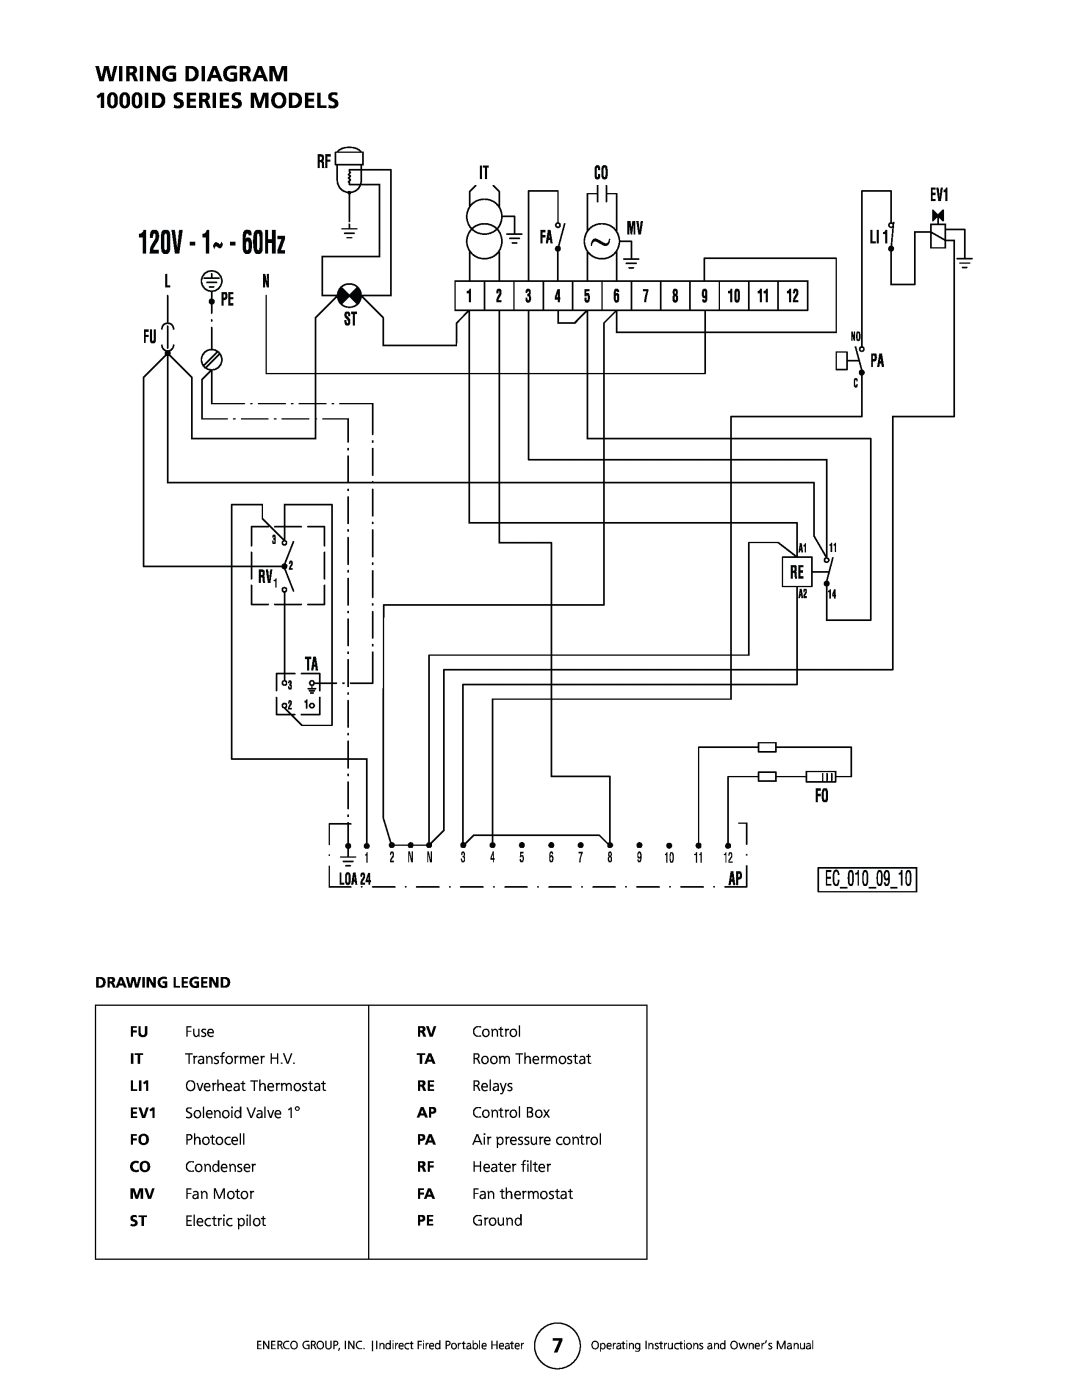 Enerco 4000ID, 2000ID 3000ID owner manual Wiring Diagram 1000ID Series Models 